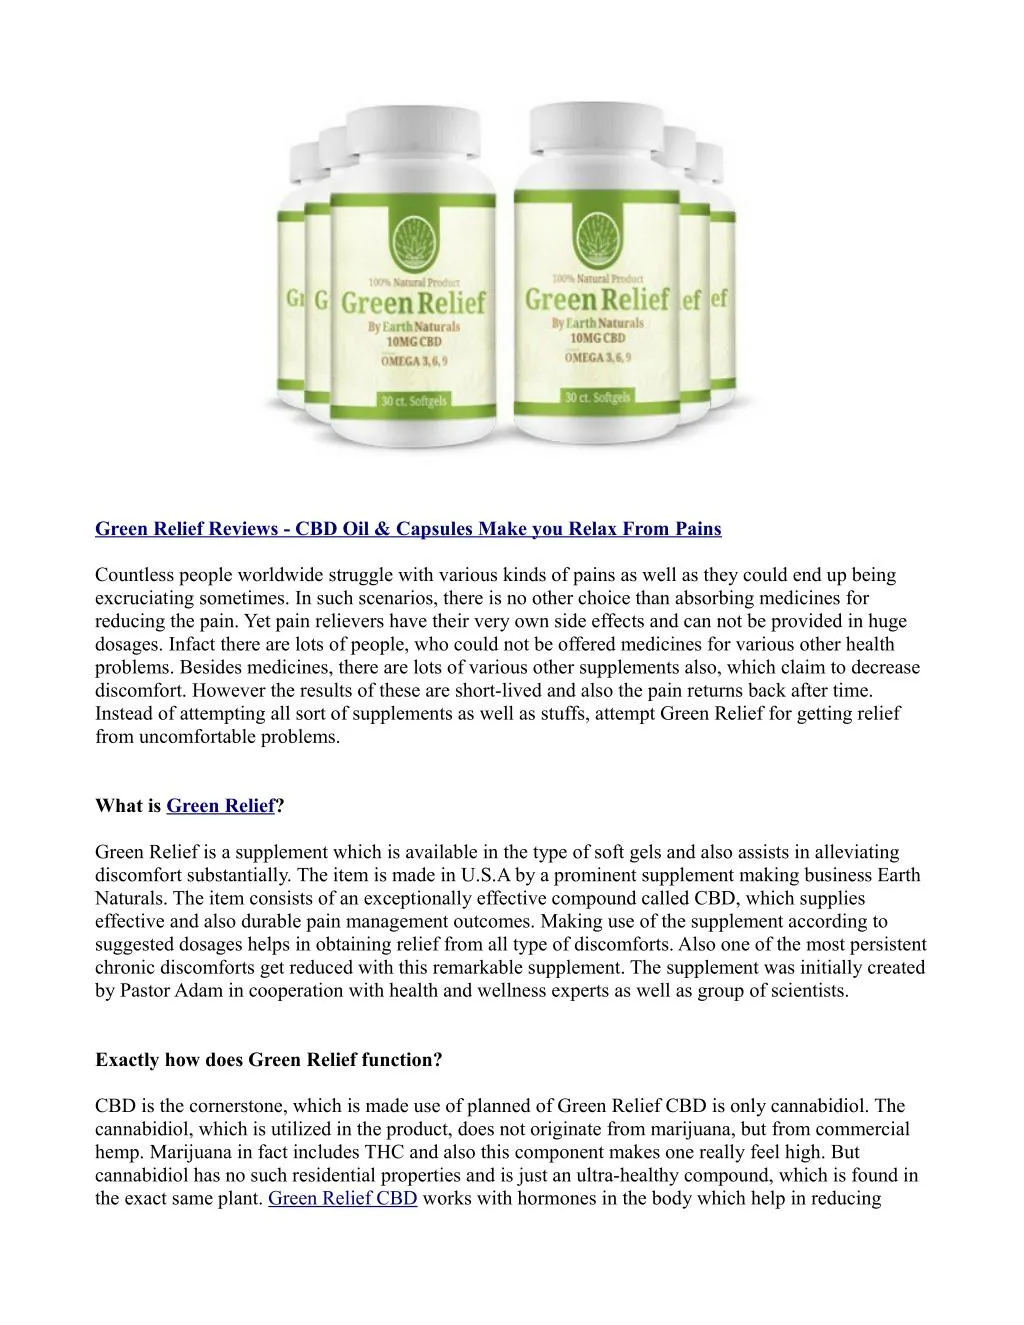 green relief reviews cbd oil capsules make